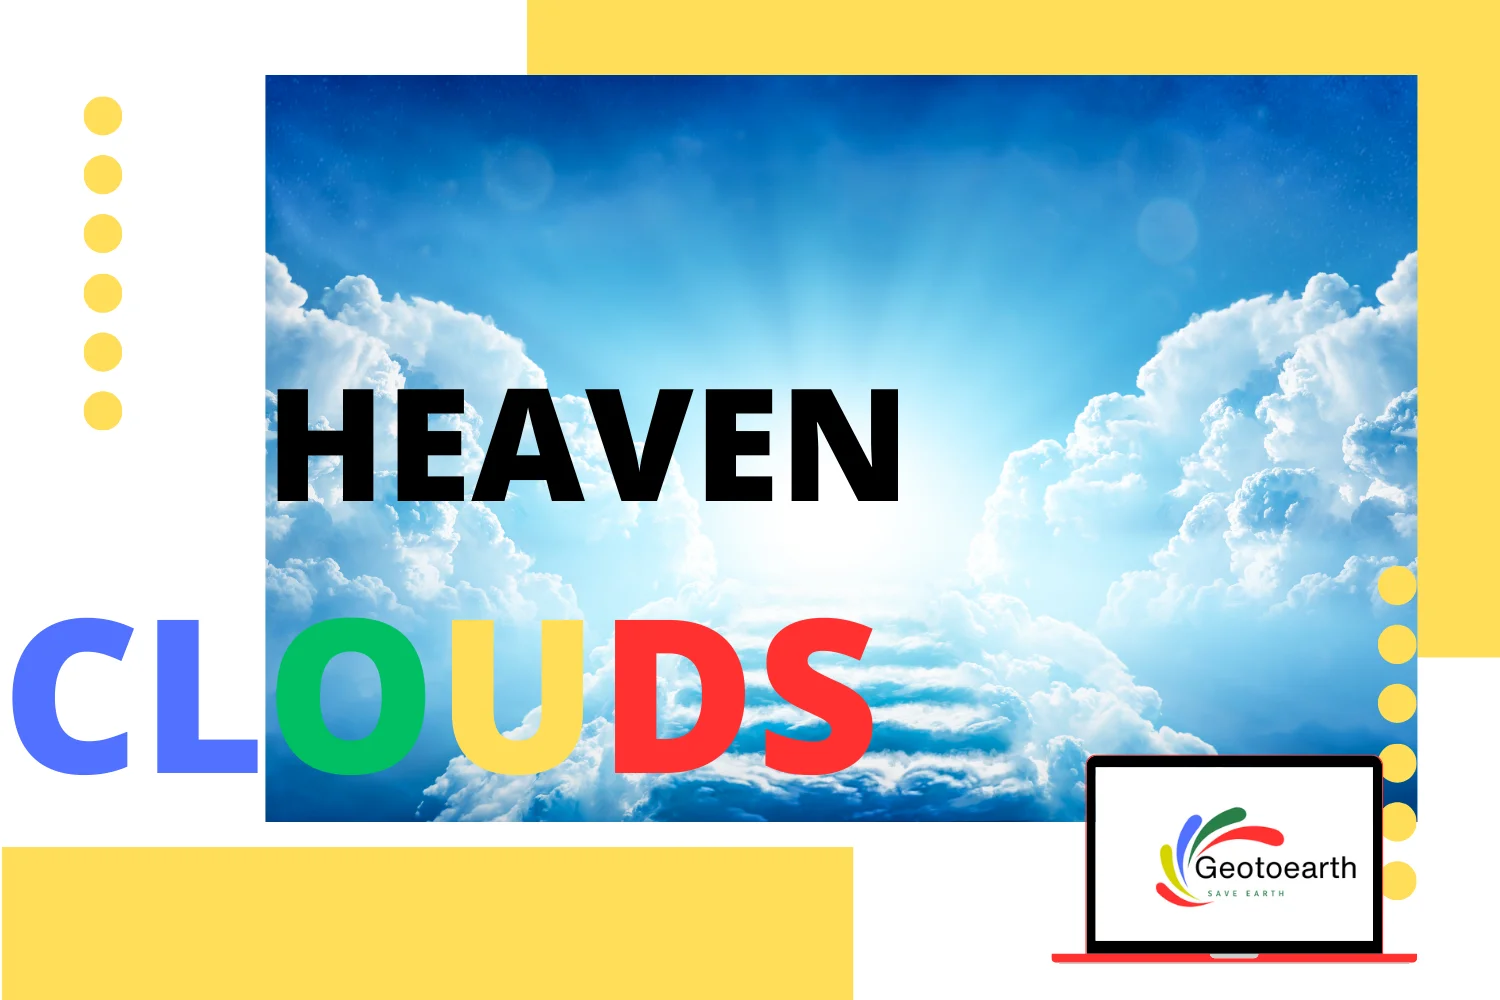 Heaven Clouds |Details About Super Element  top 5 Features|